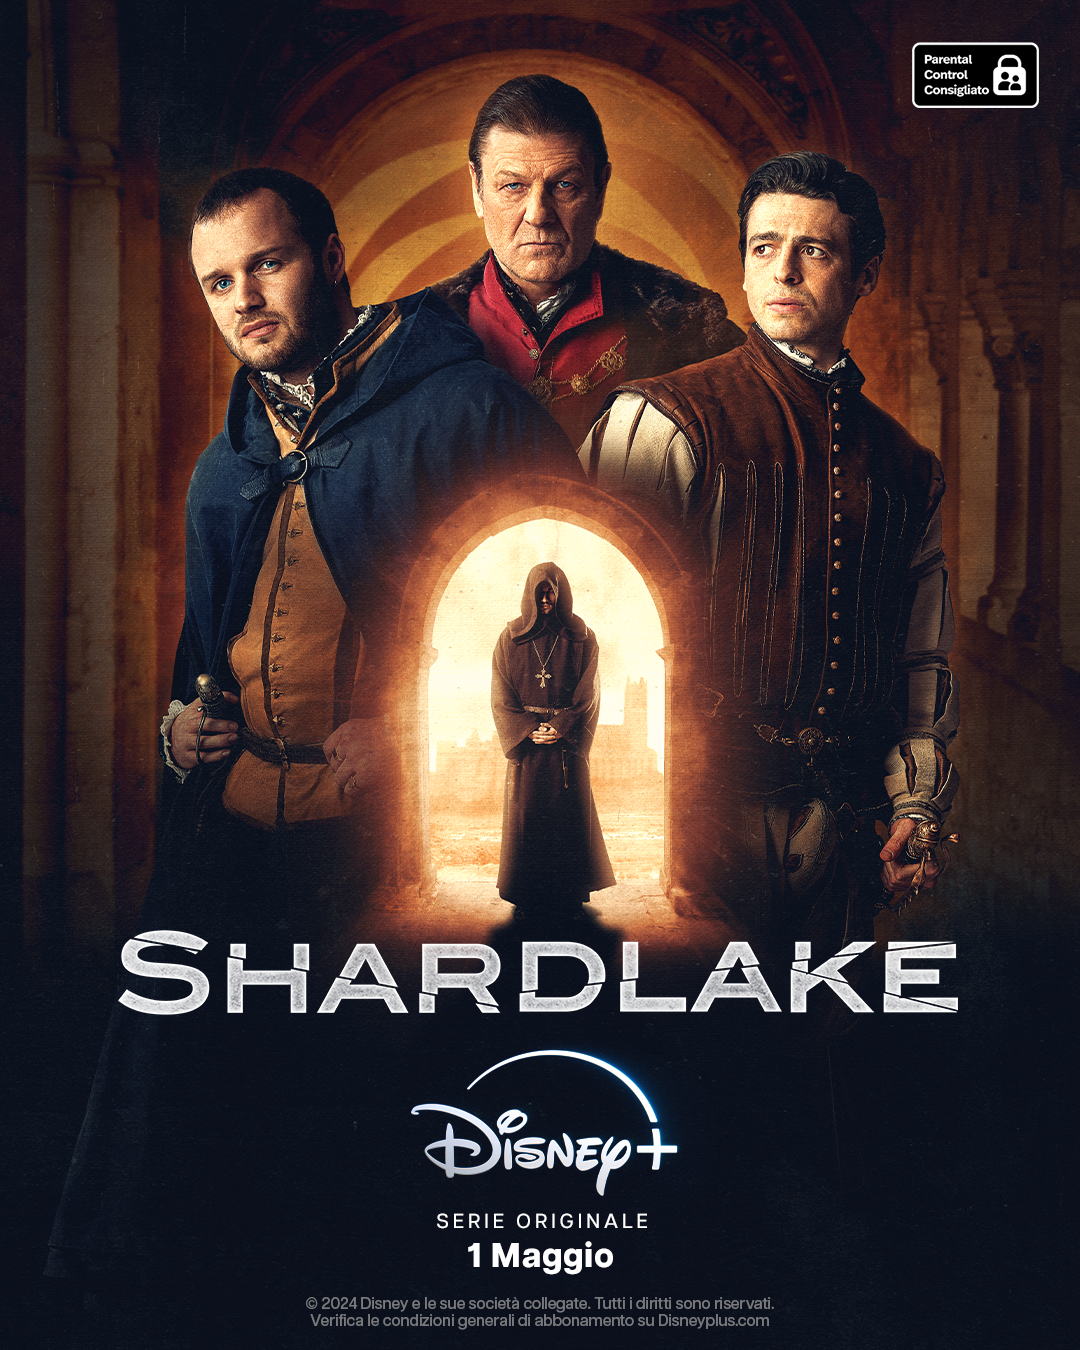 Disney+: Shardlake, dal 1° maggio la nuova serie originale in streaming